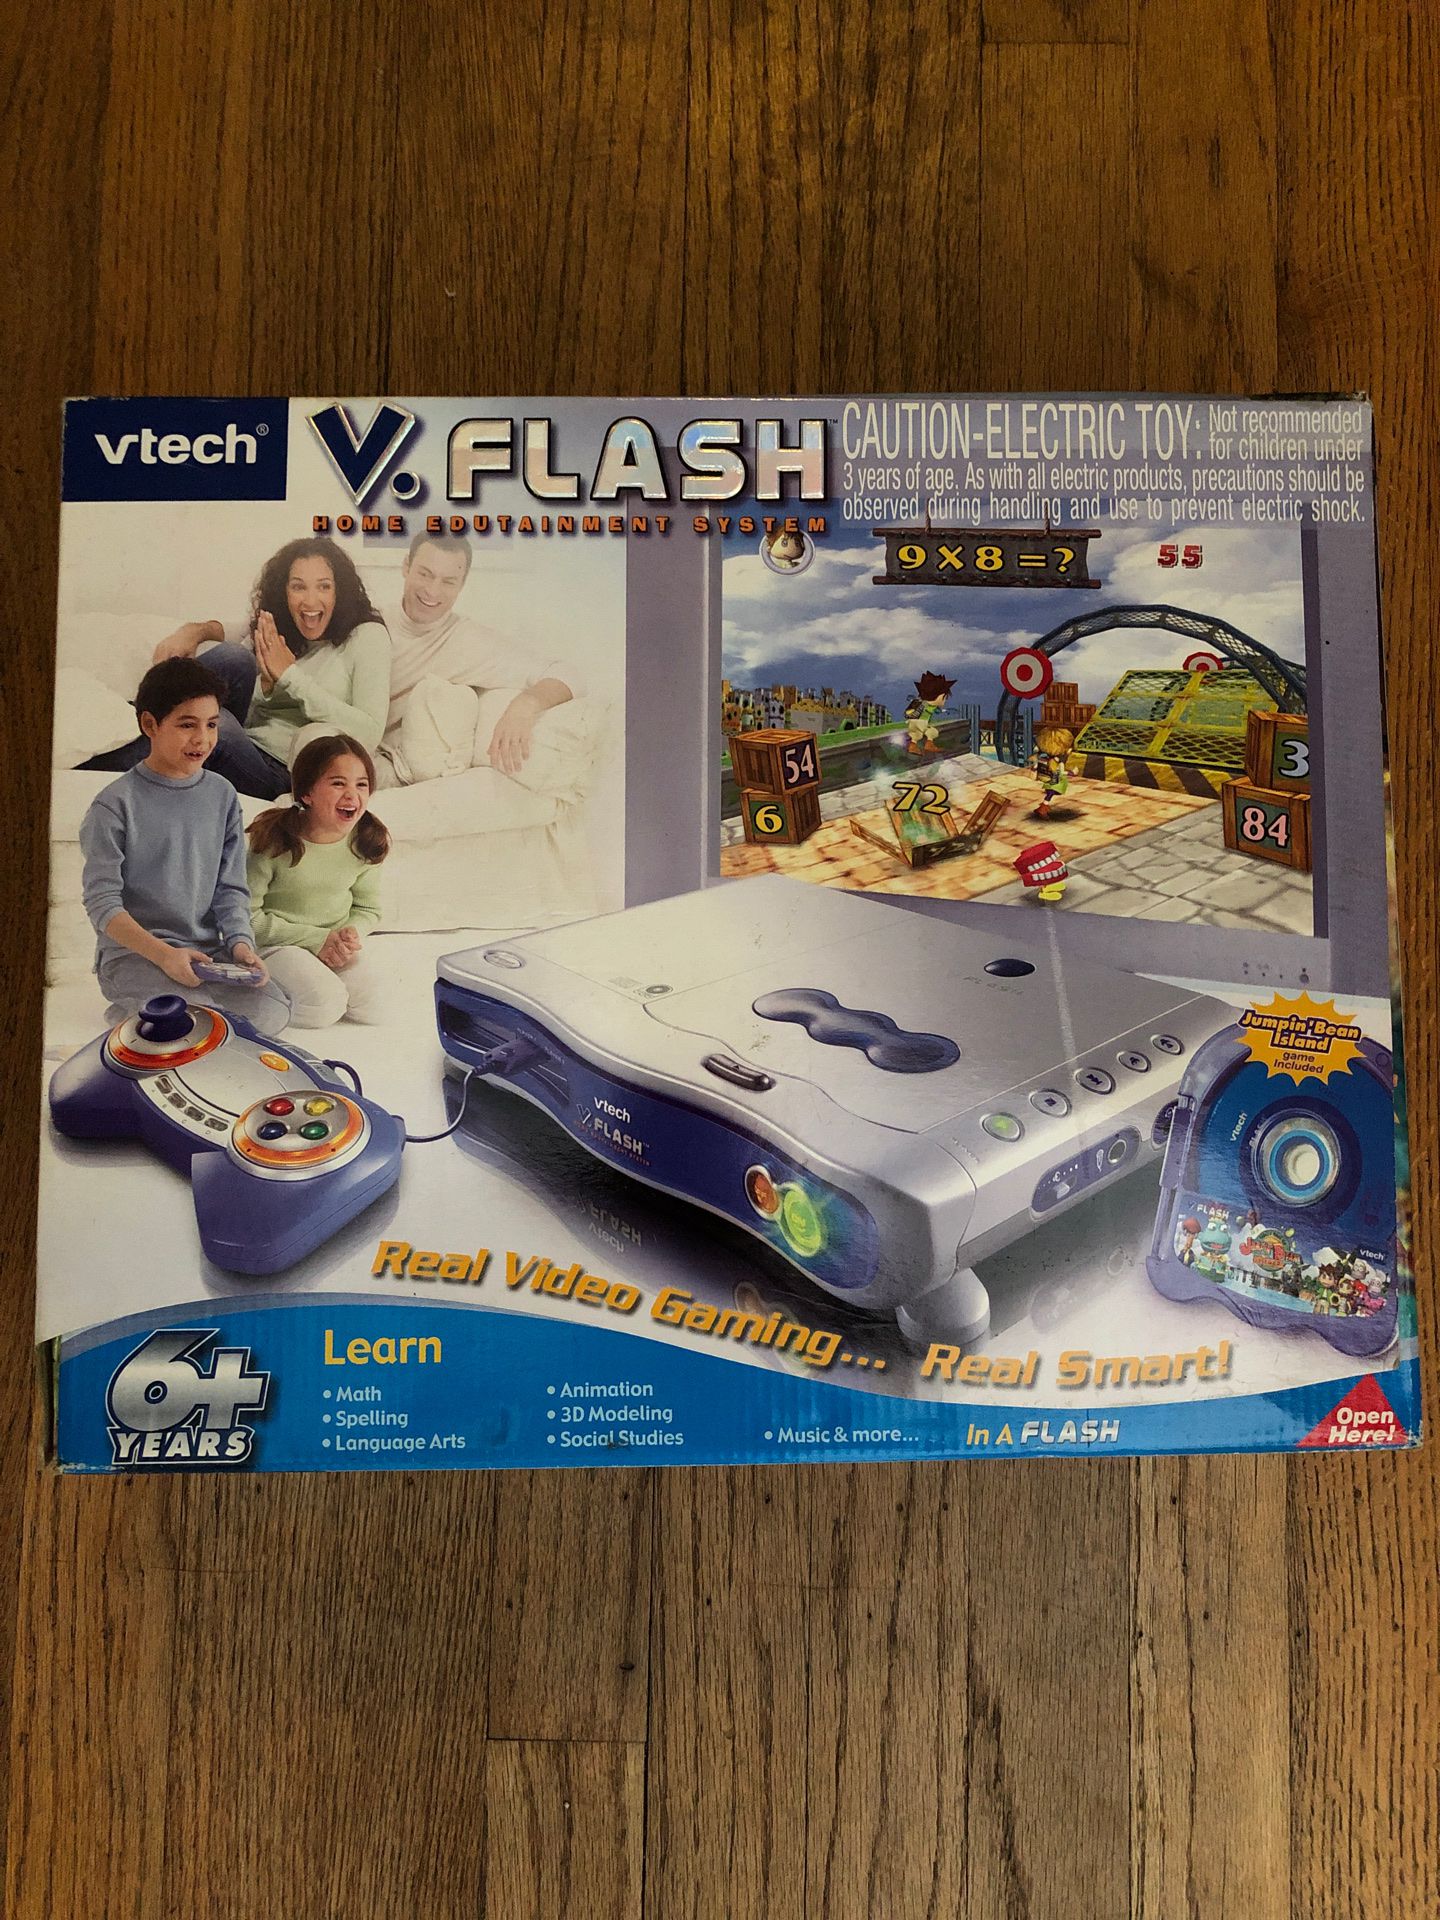 VTech V Flash home educational system video game